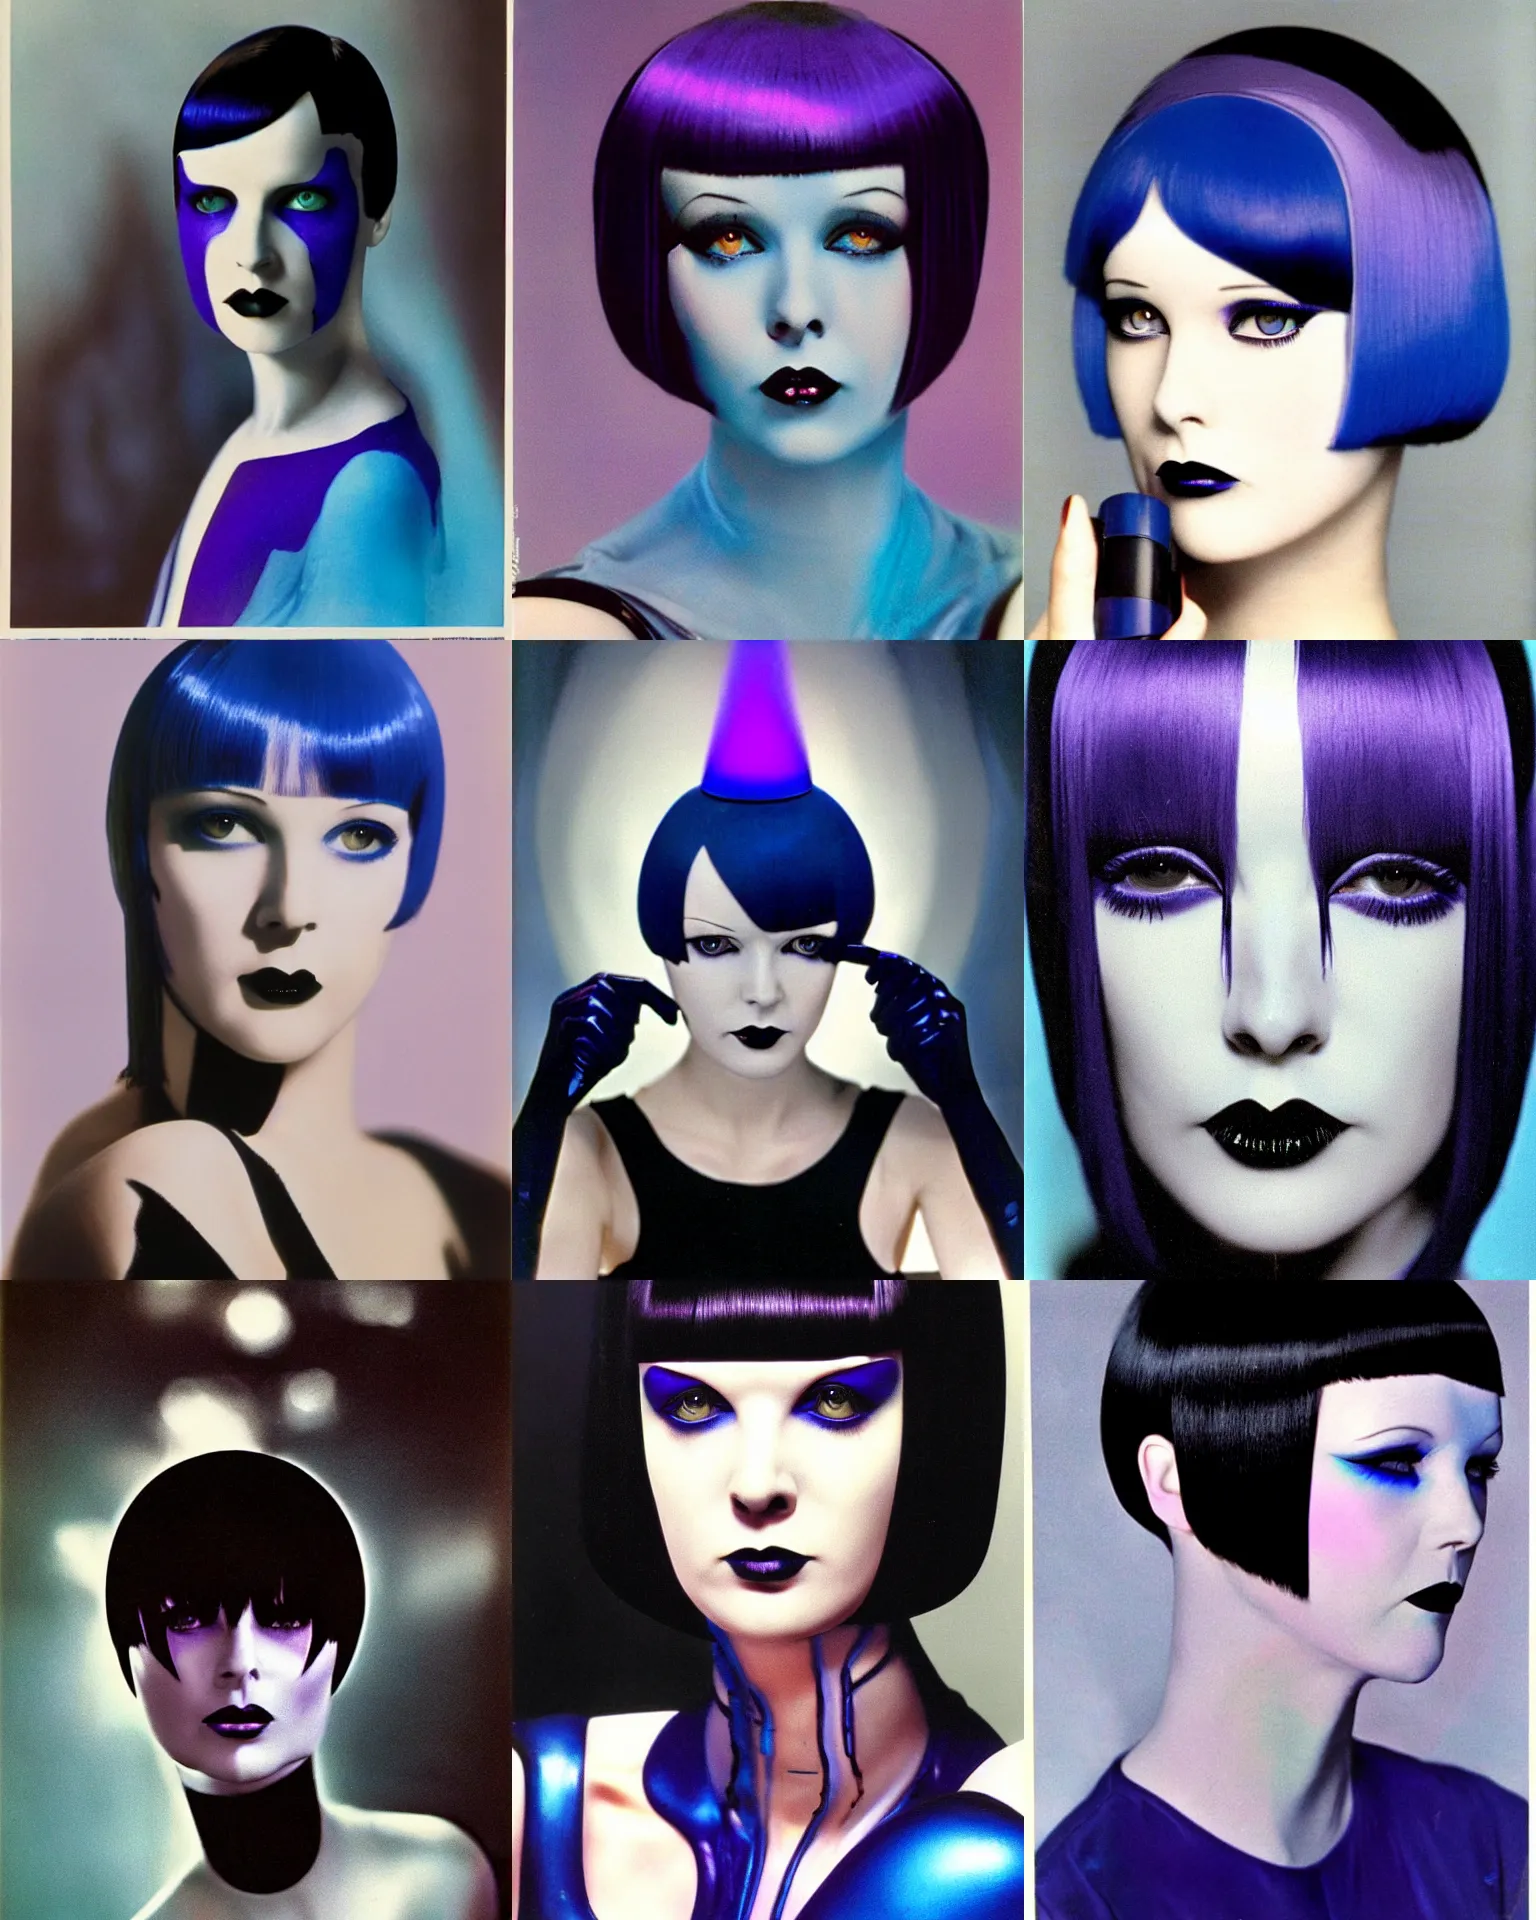 Prompt: mary louise brooks, half robot, 1 9 8 0 s airbrush, blue rim lighting, goth blue and purple makeup, black shiny bob haircut